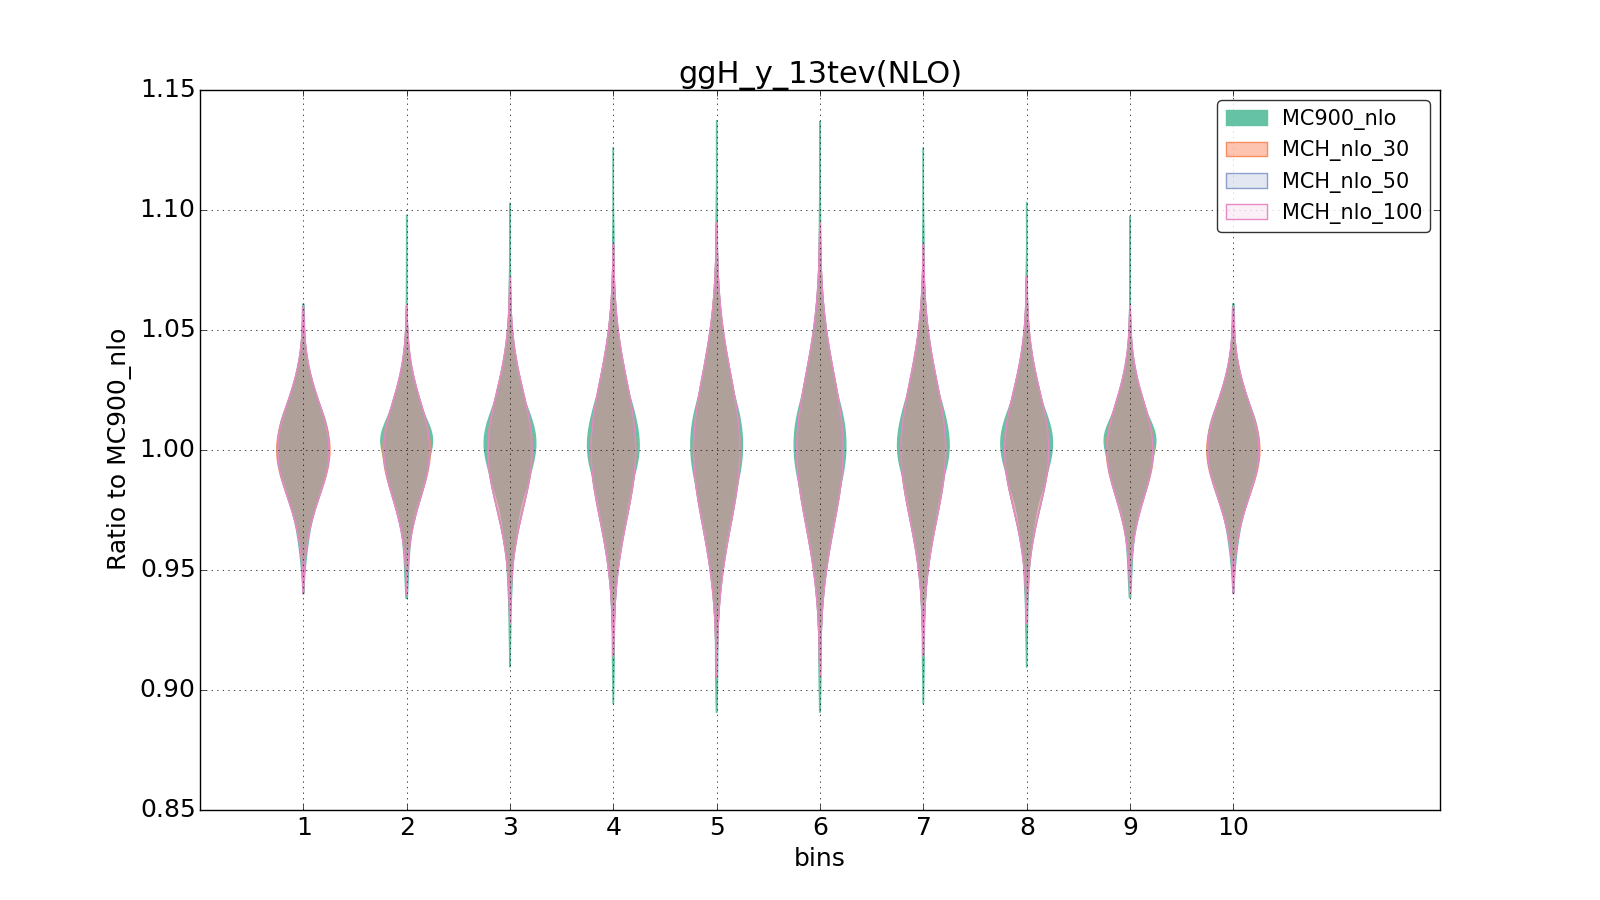 figure plots/pheno_new/NLO/violinplot_ggH_y_13tev(NLO).png